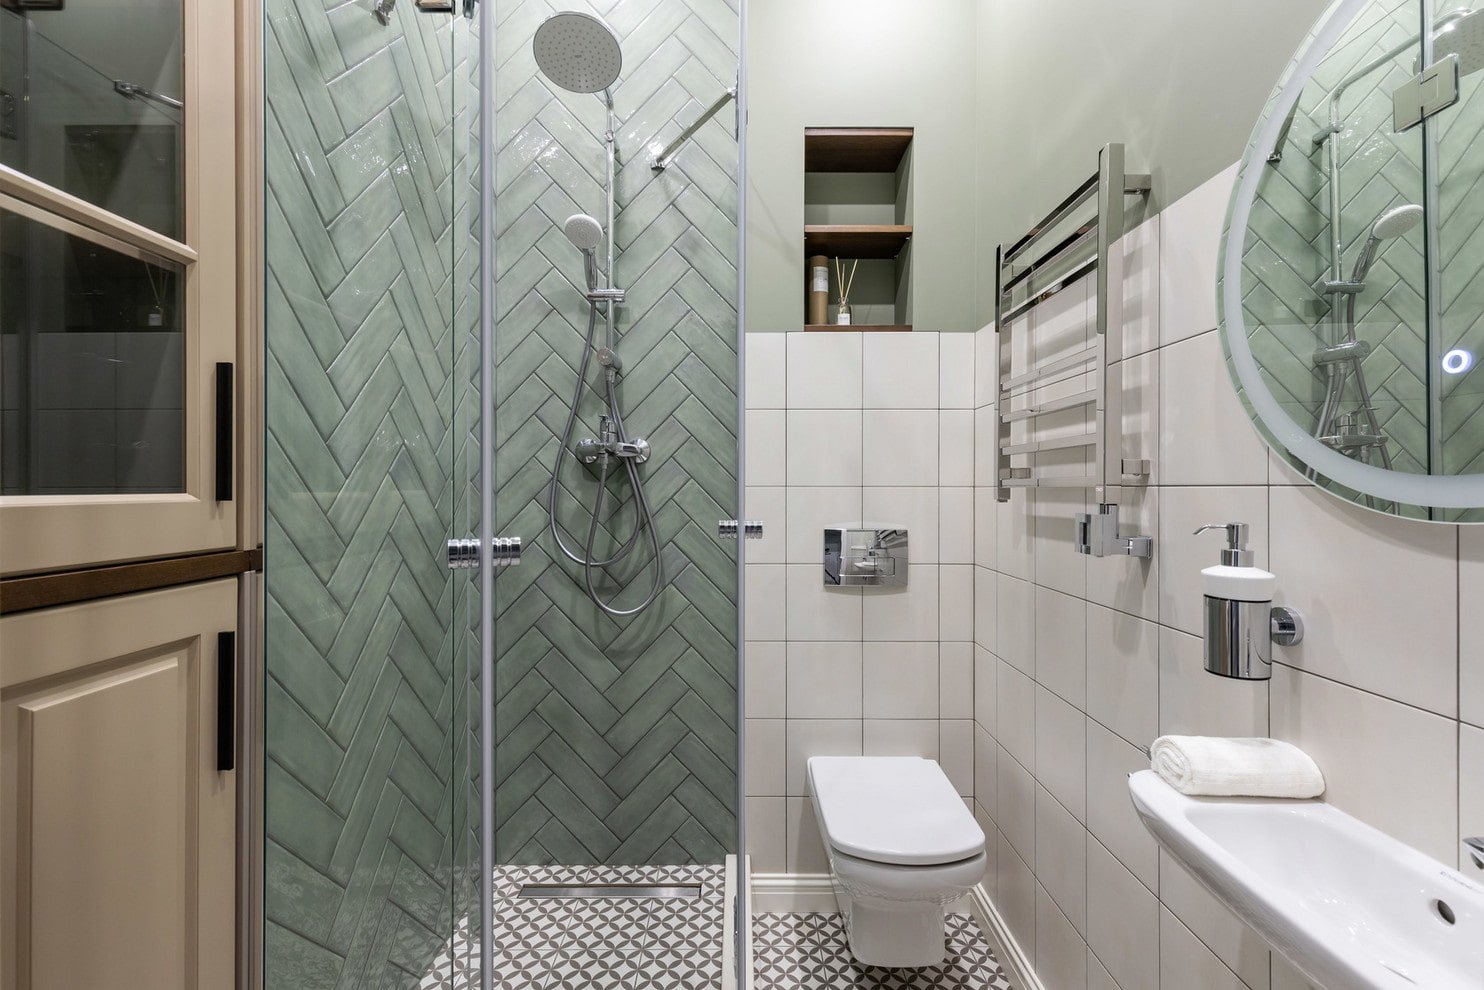 Дизайн ванной комнаты 16 кв м